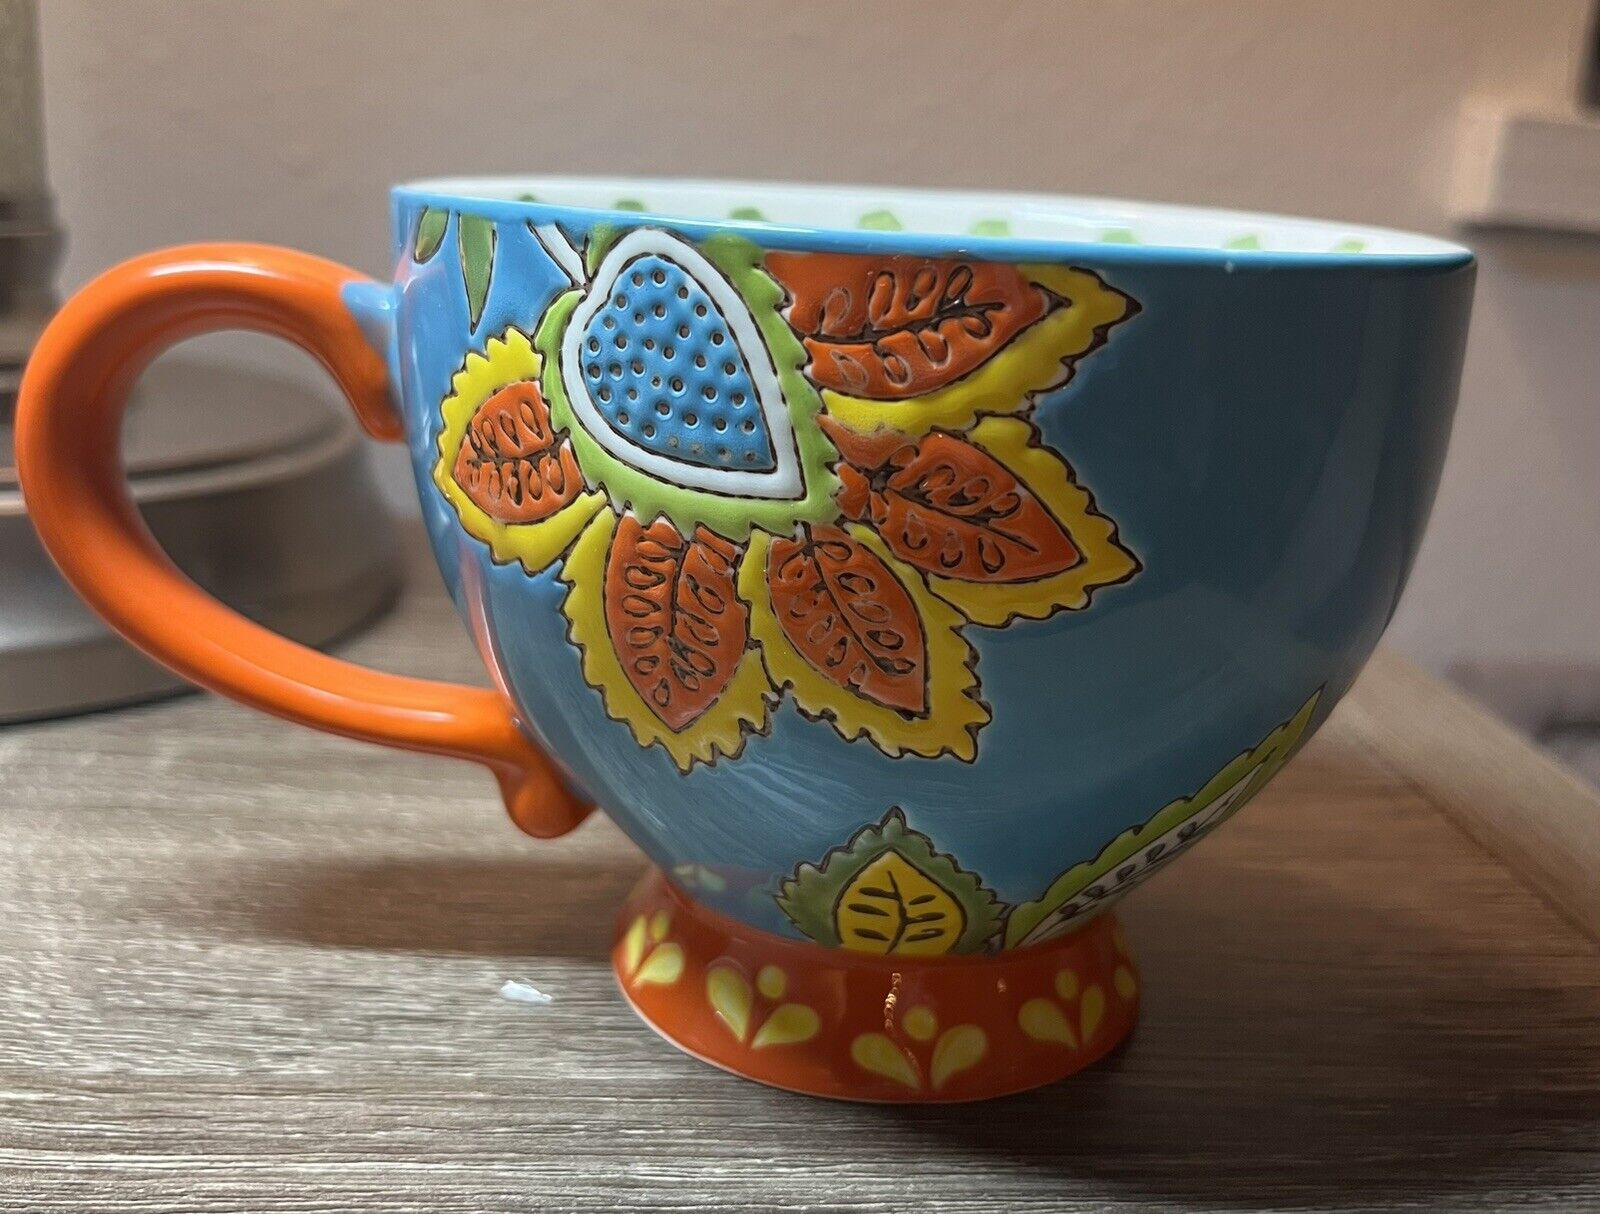 Dutch Wax Coastline Imports Hand Painted Ceramic Coffee Cup Mug Floral Design